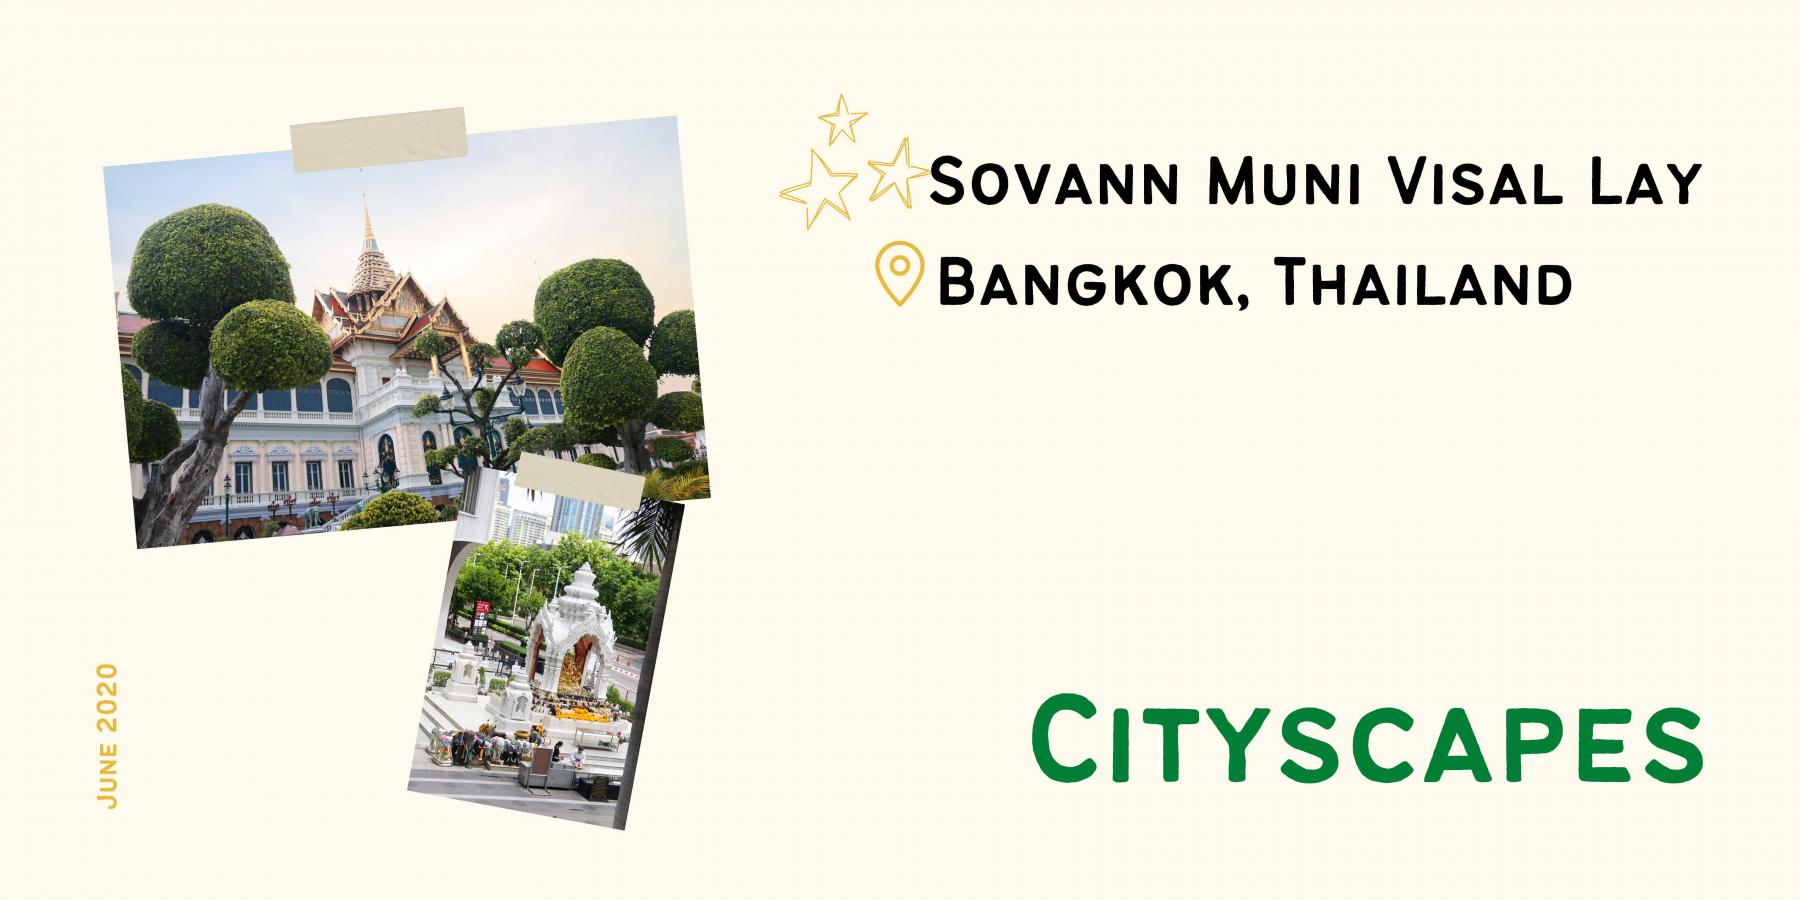 Cityscapes Winner Sovann Muni Visal Lay